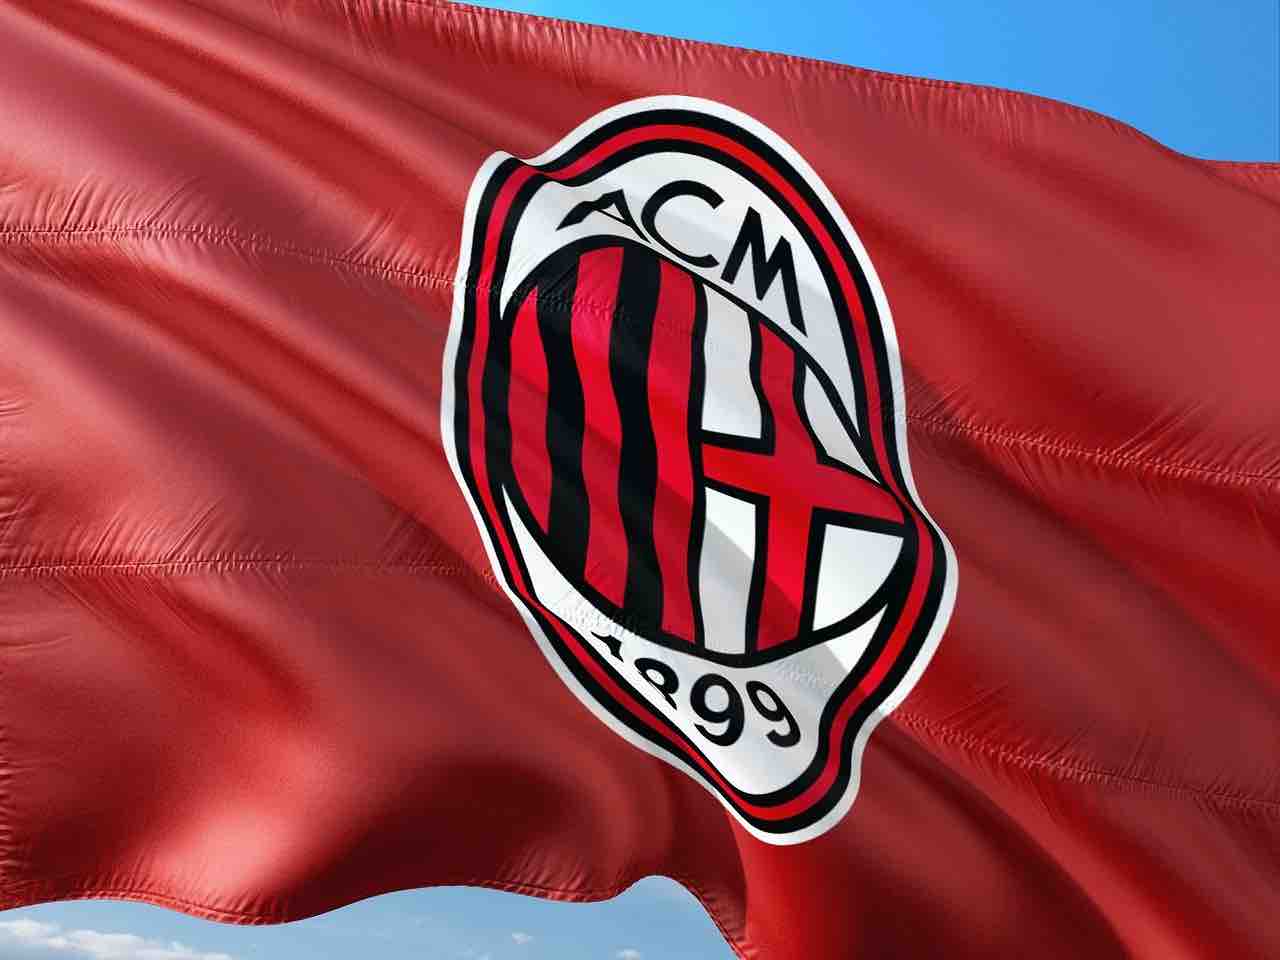 Il logo dell'AC Milan